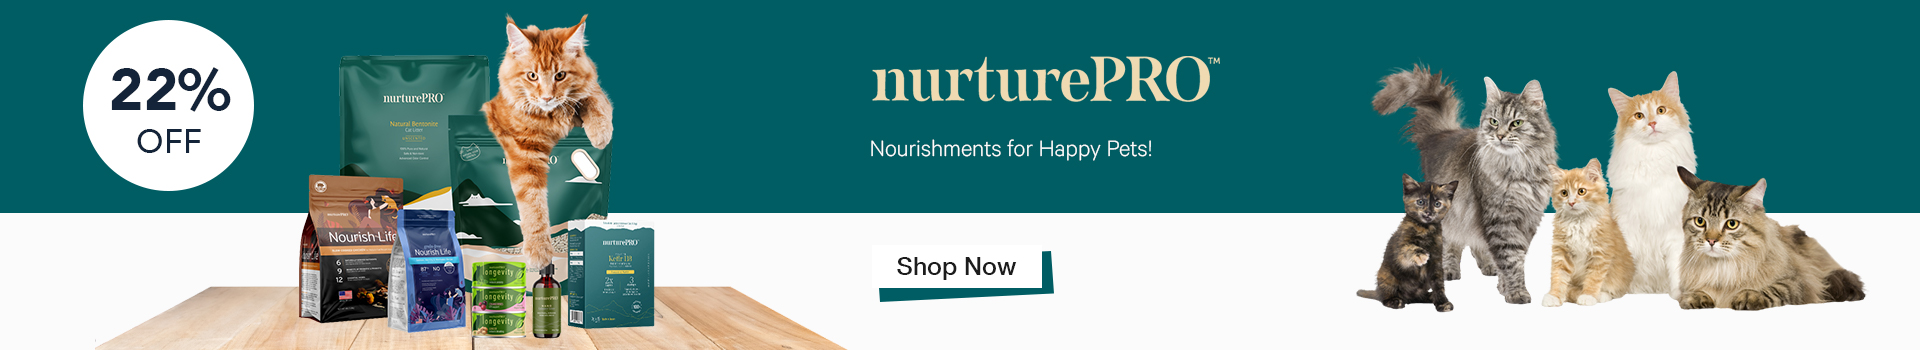 Nurture Pro PetMall Singapore